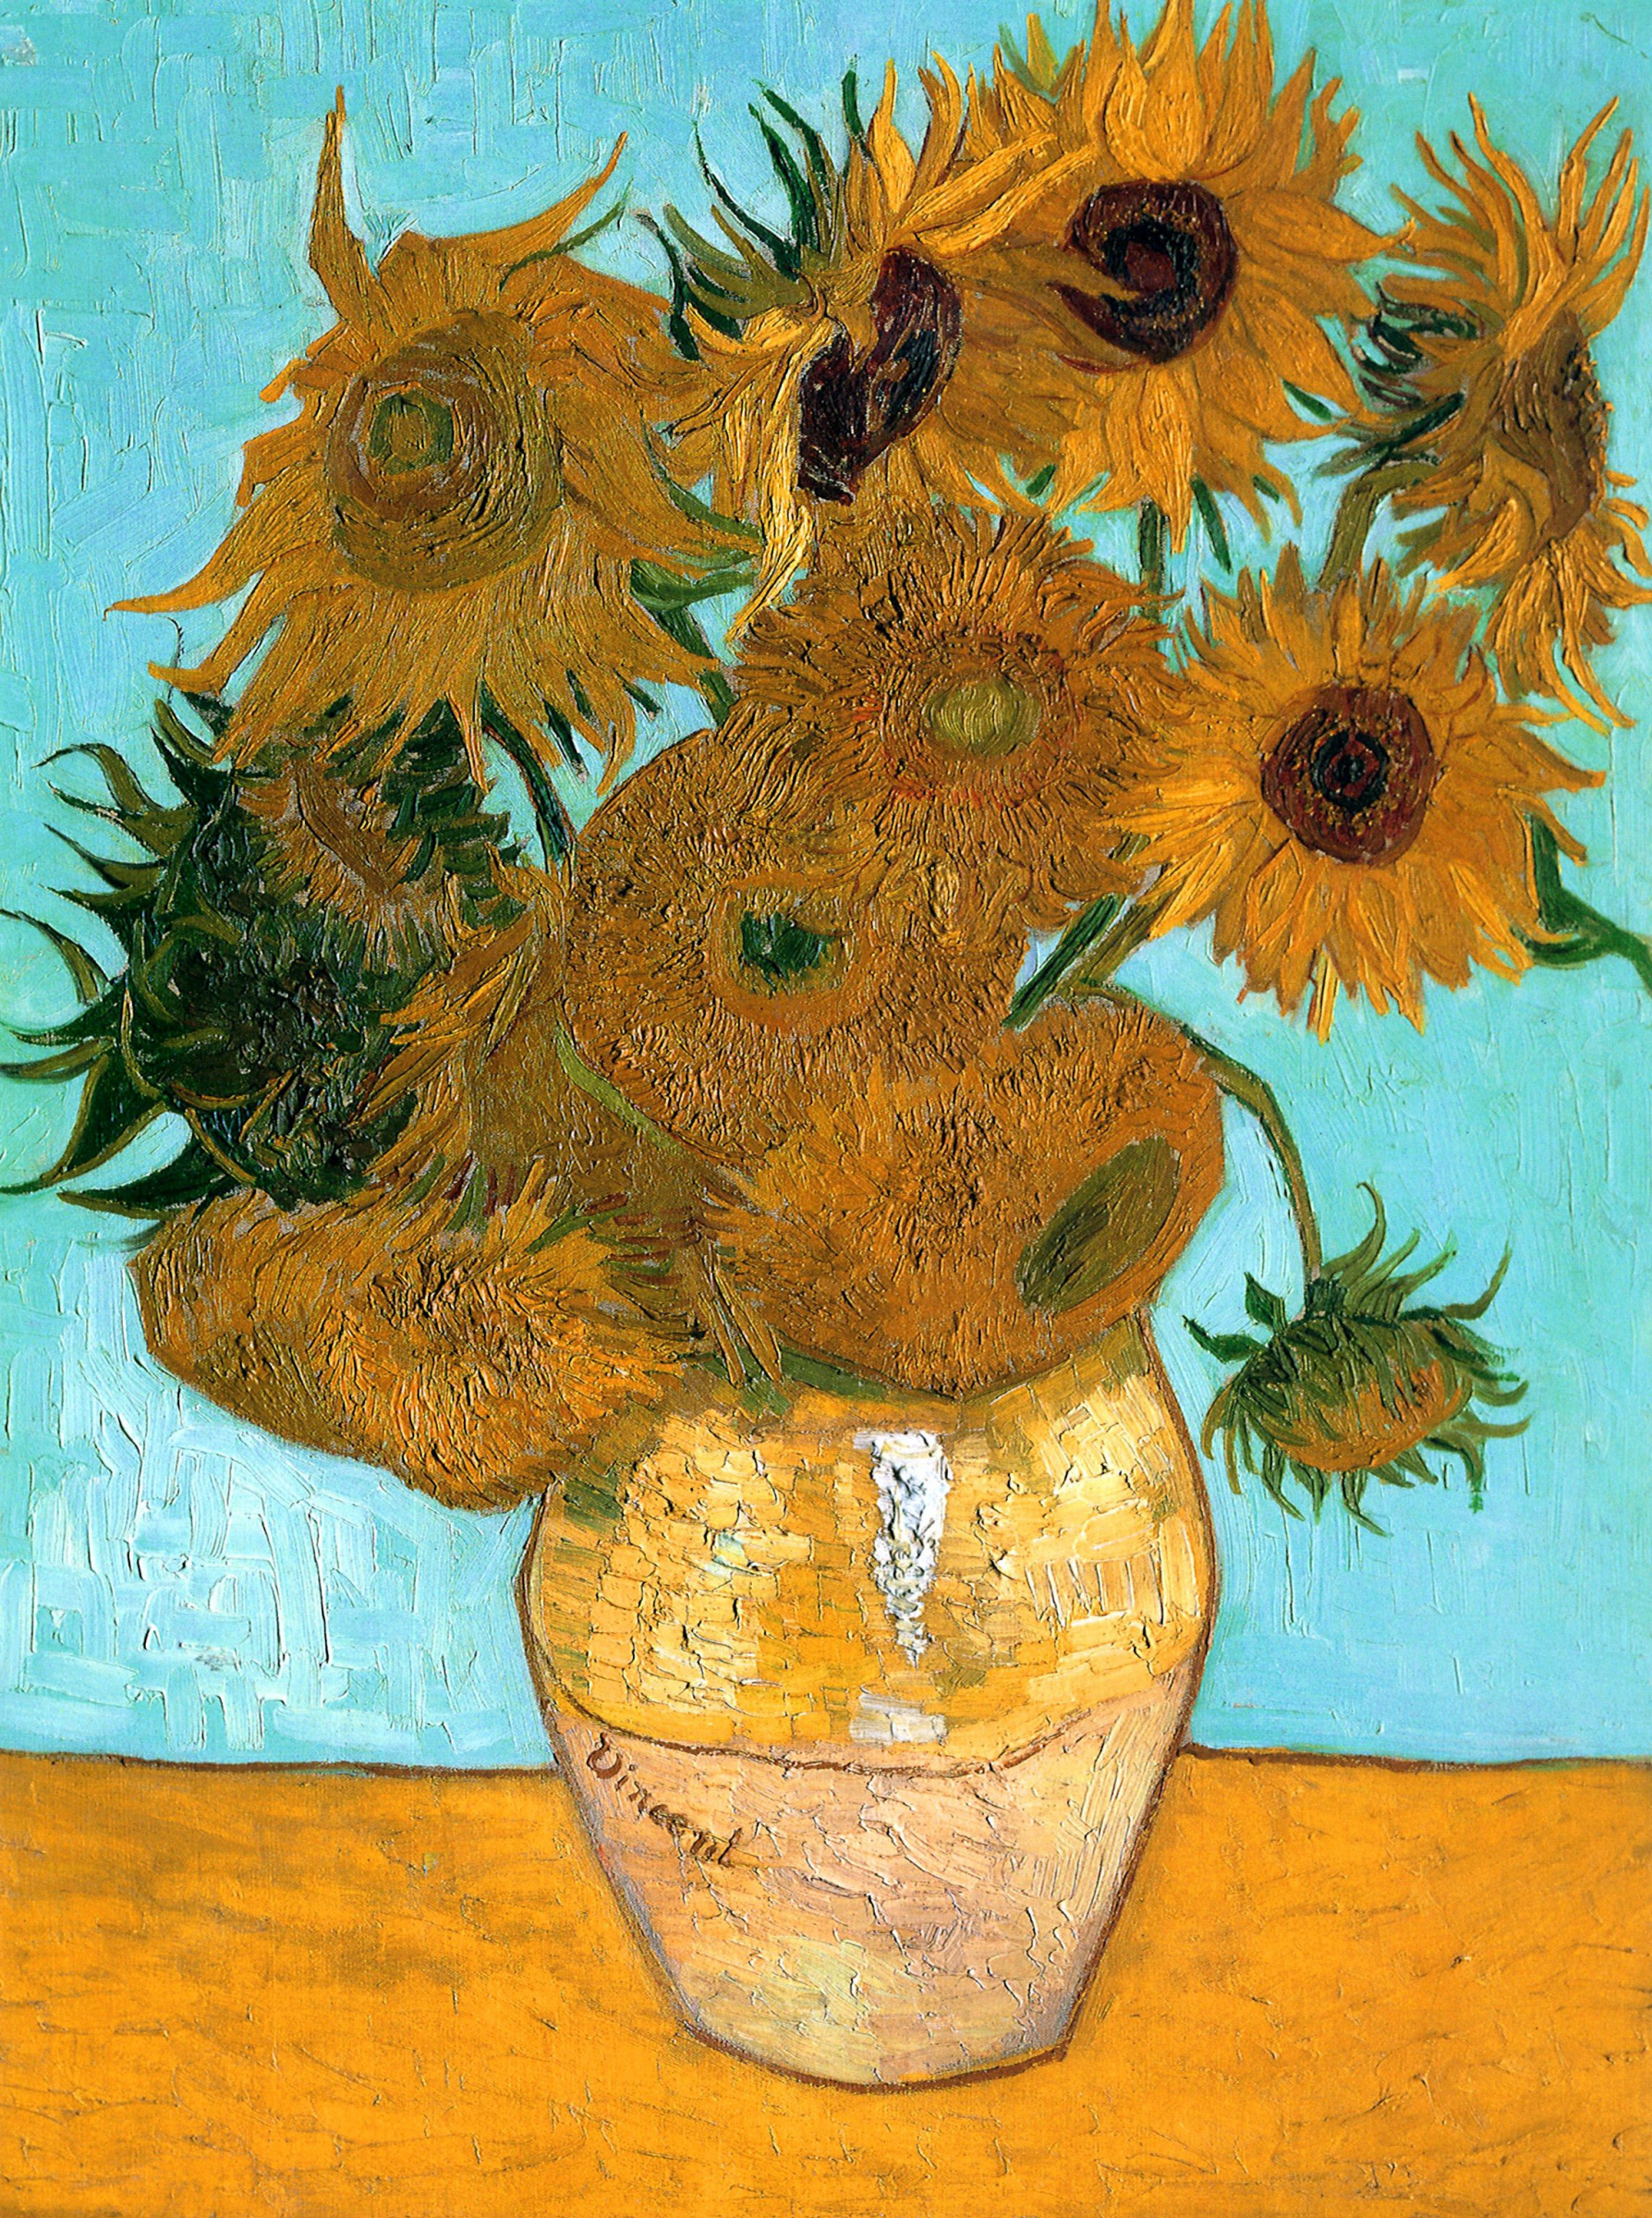 12-Pack Best Stocking Stuffer Gifts for Men Women Van Gogh Famous Paintings Guitar Picks - Almond Blossom Sunflowers Series Celluloid Medium 